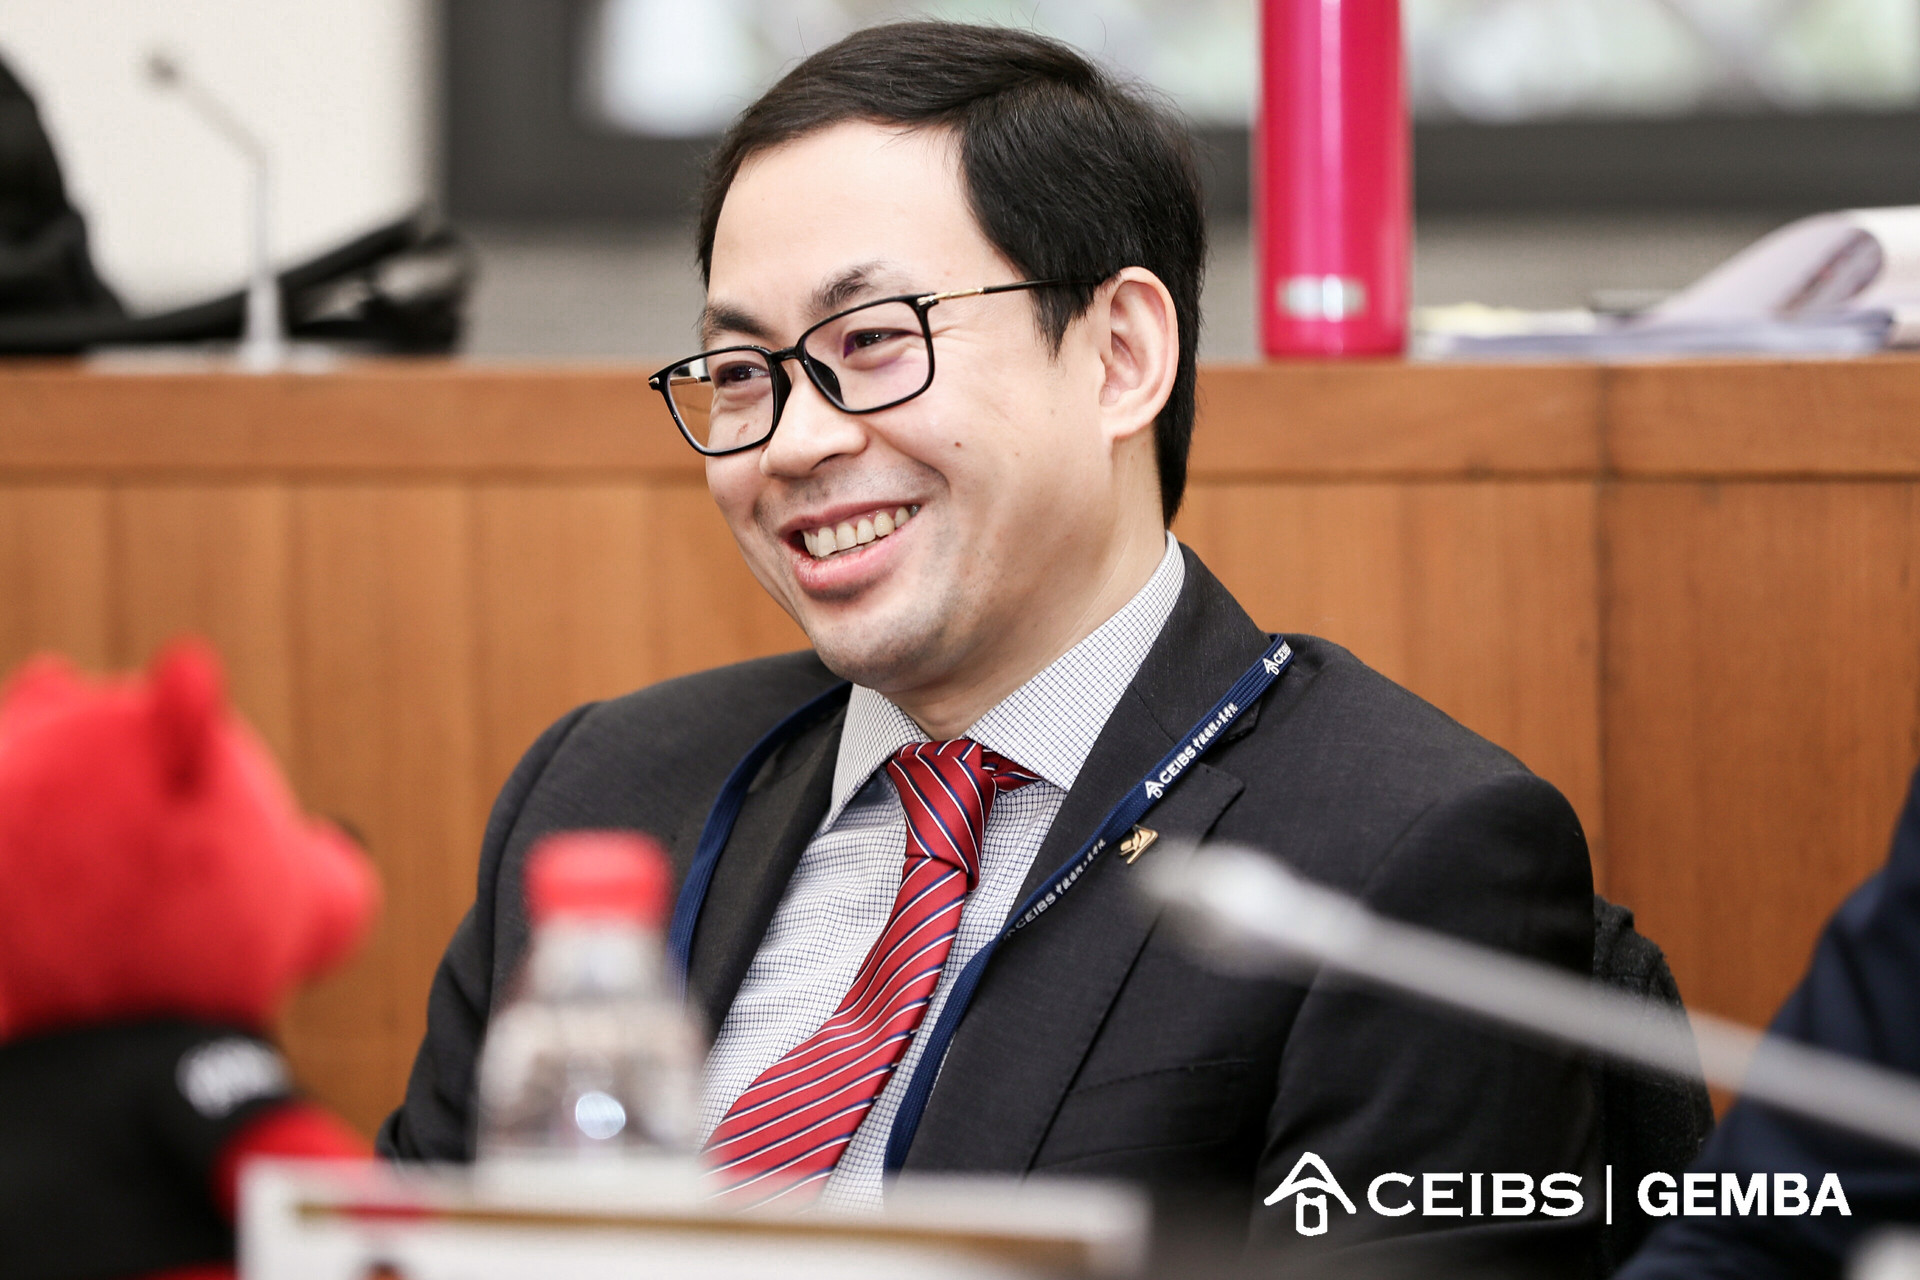 Roger Lao, CEIBS Global EMBA 2020